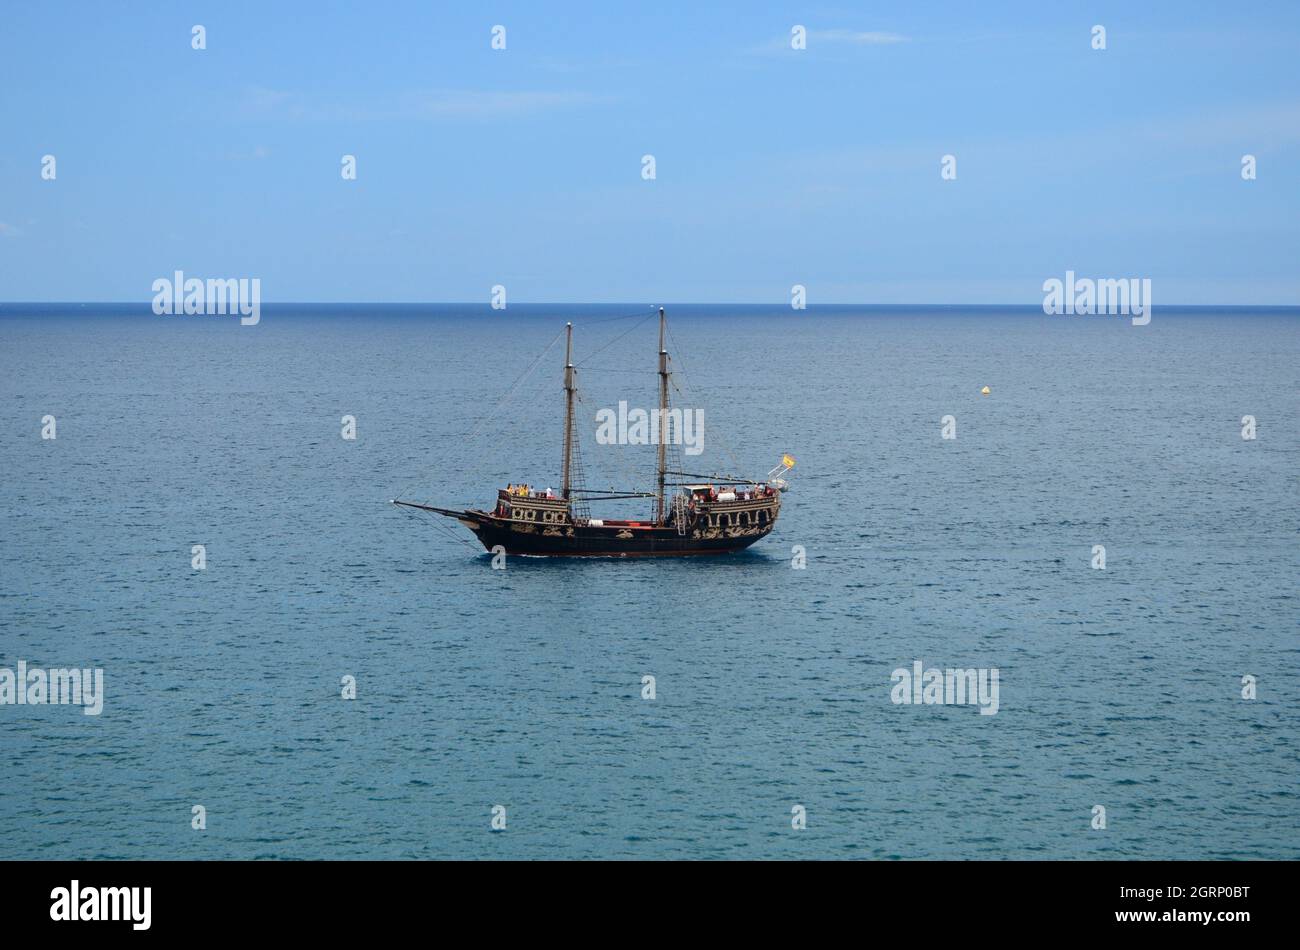 Sailboat In Sea Against Sky Stock Photo